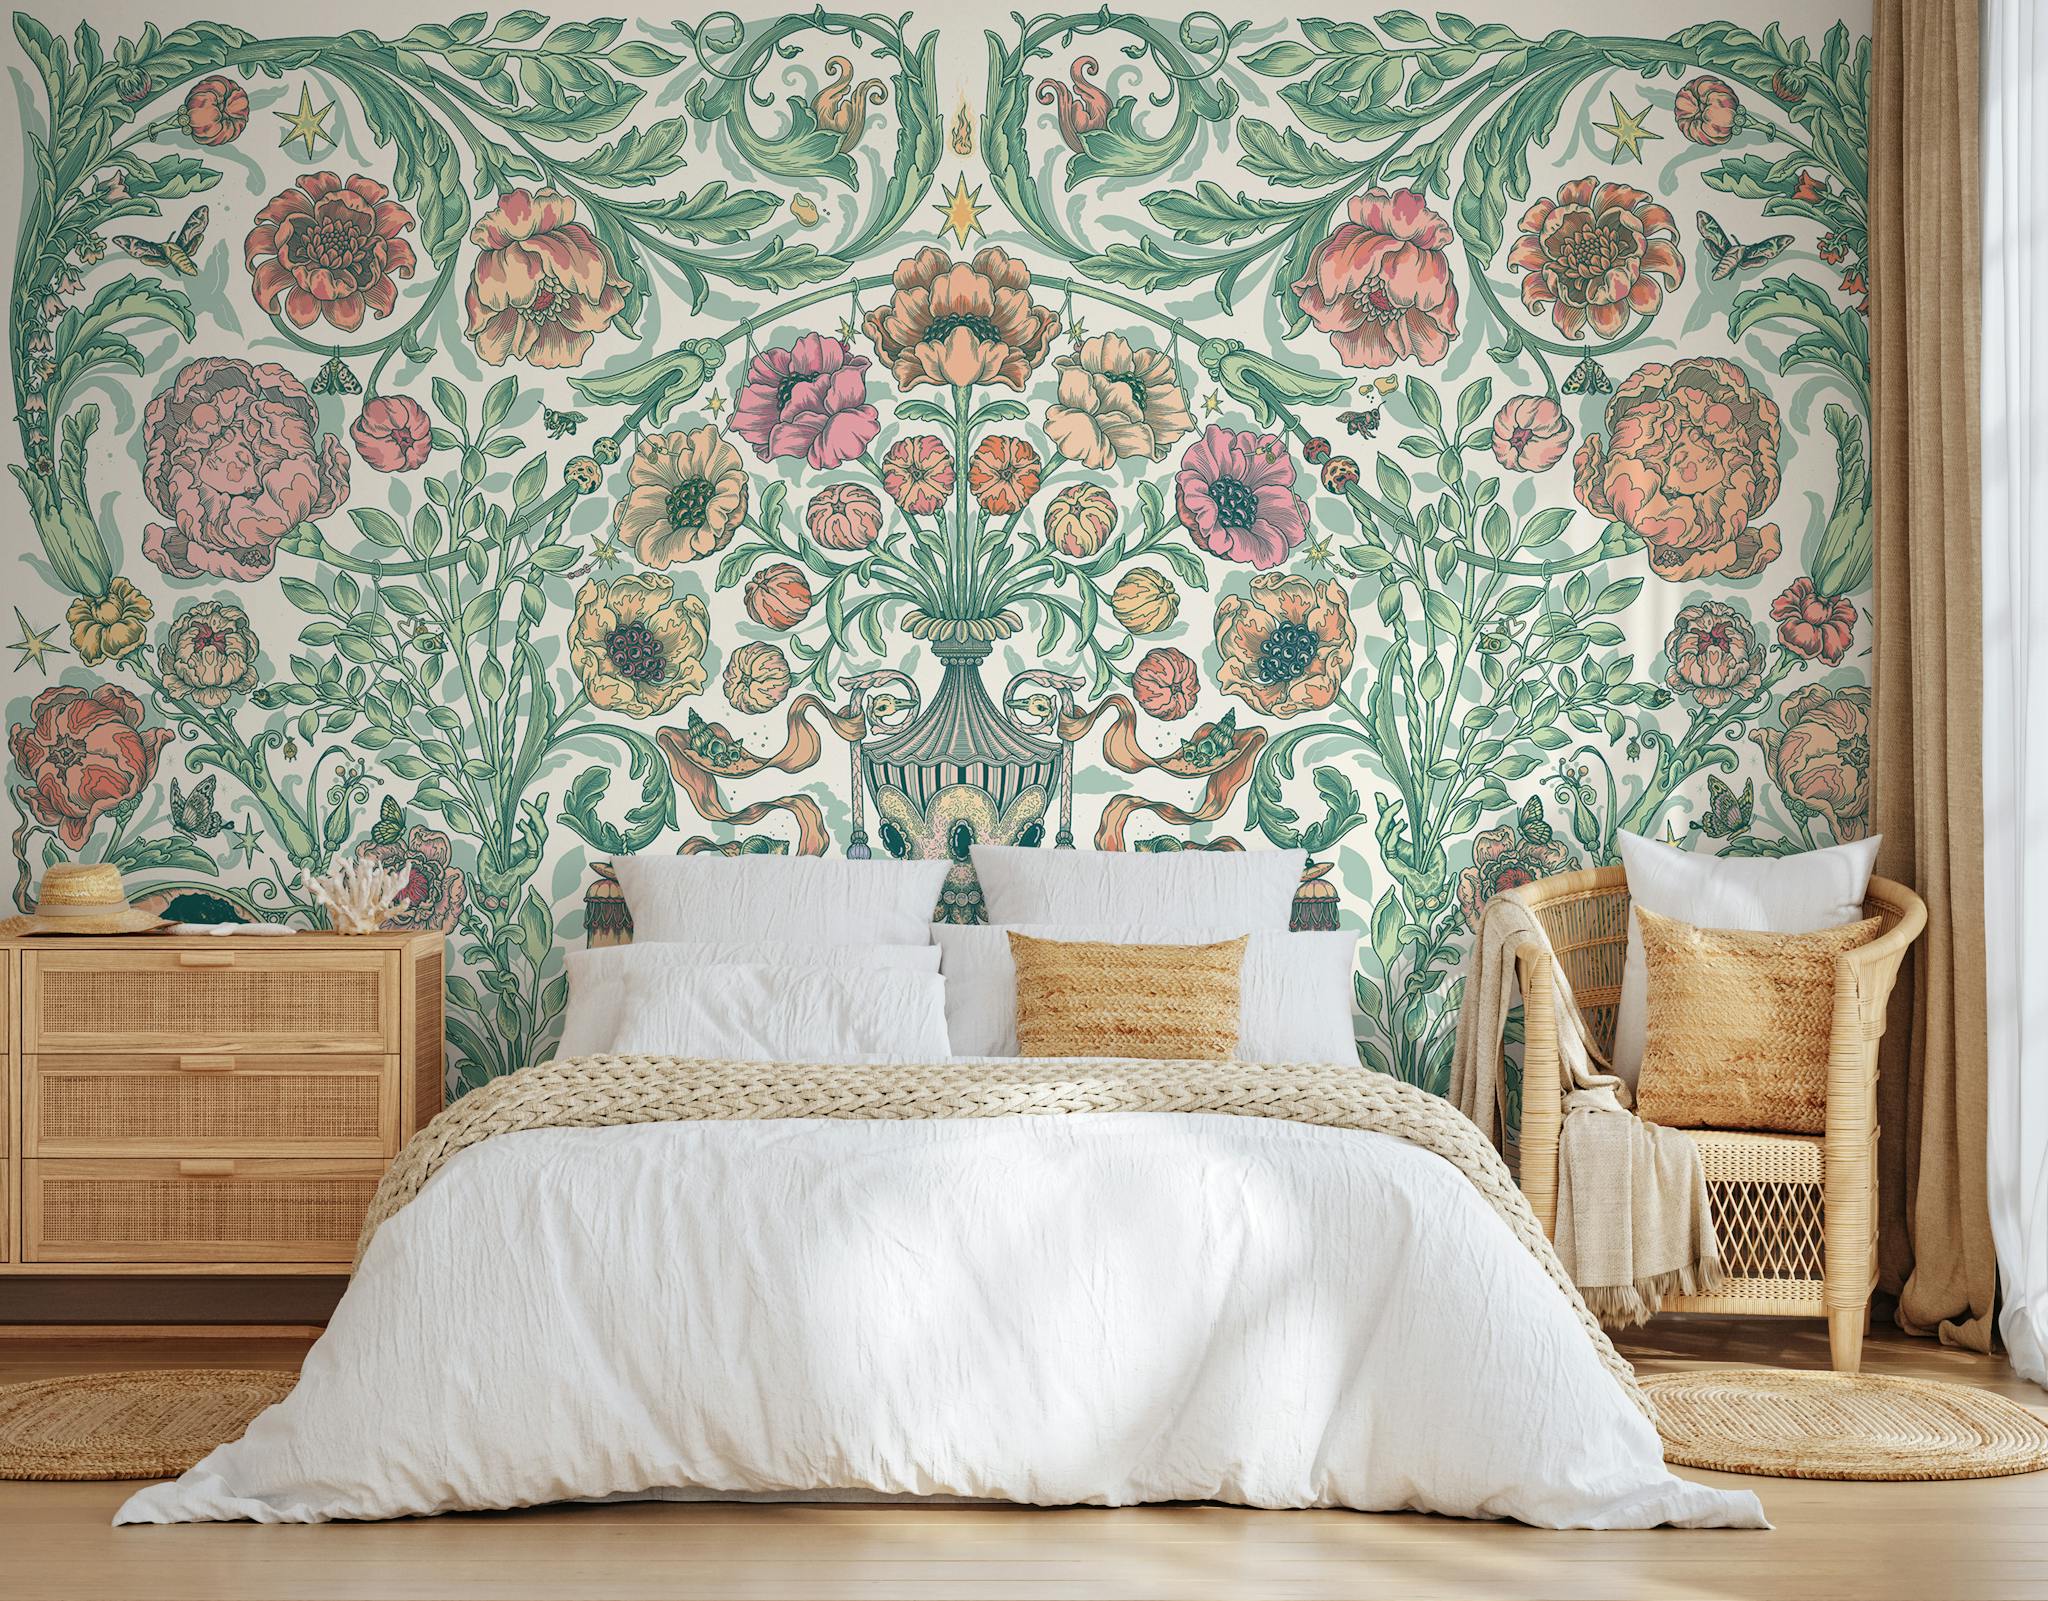 Wallpaper "le jardin merveilleux" fresco on a bedroom wall